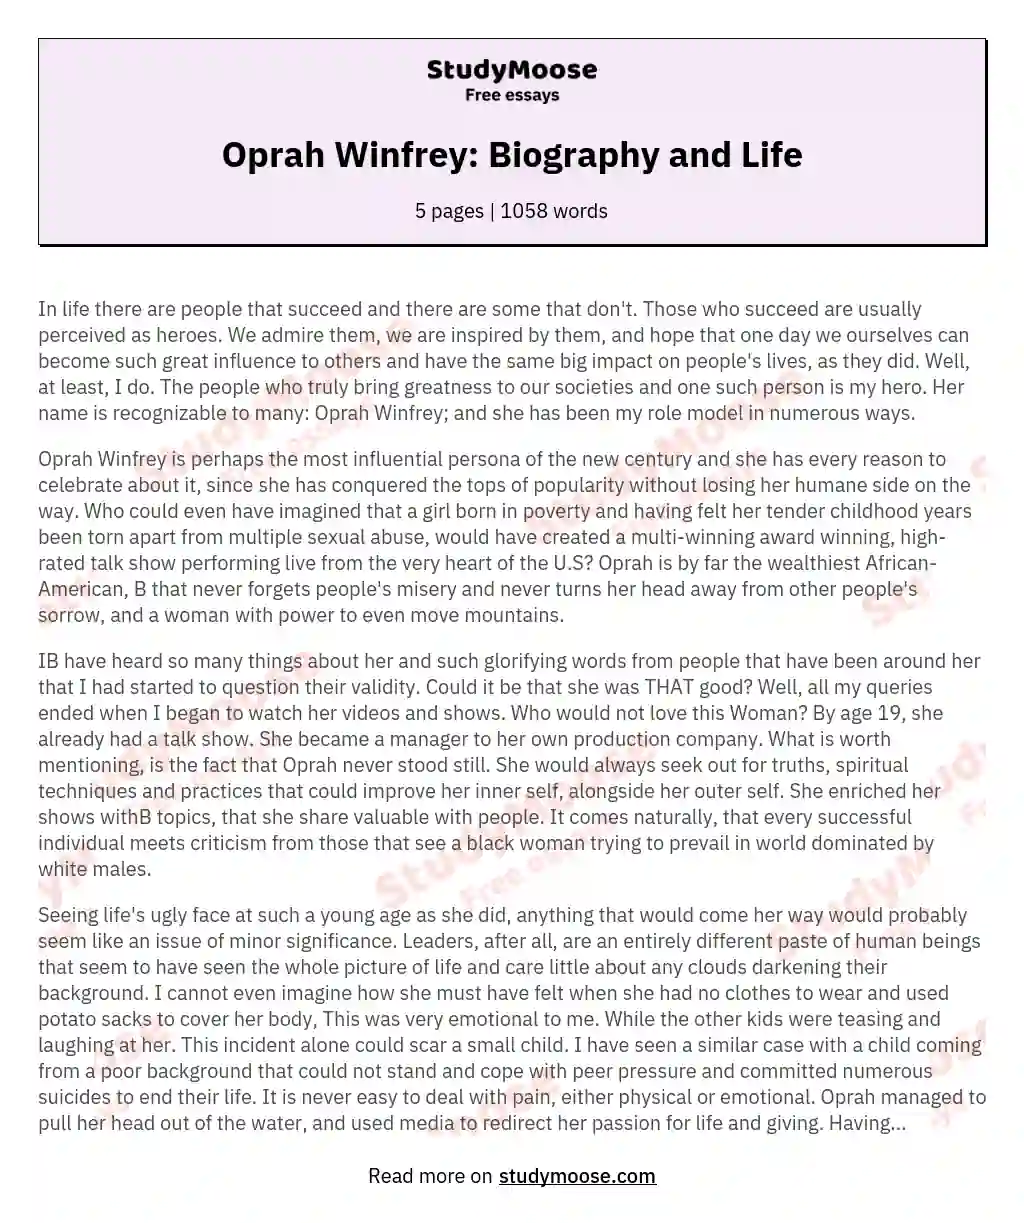 Oprah Winfrey: Biography and Life